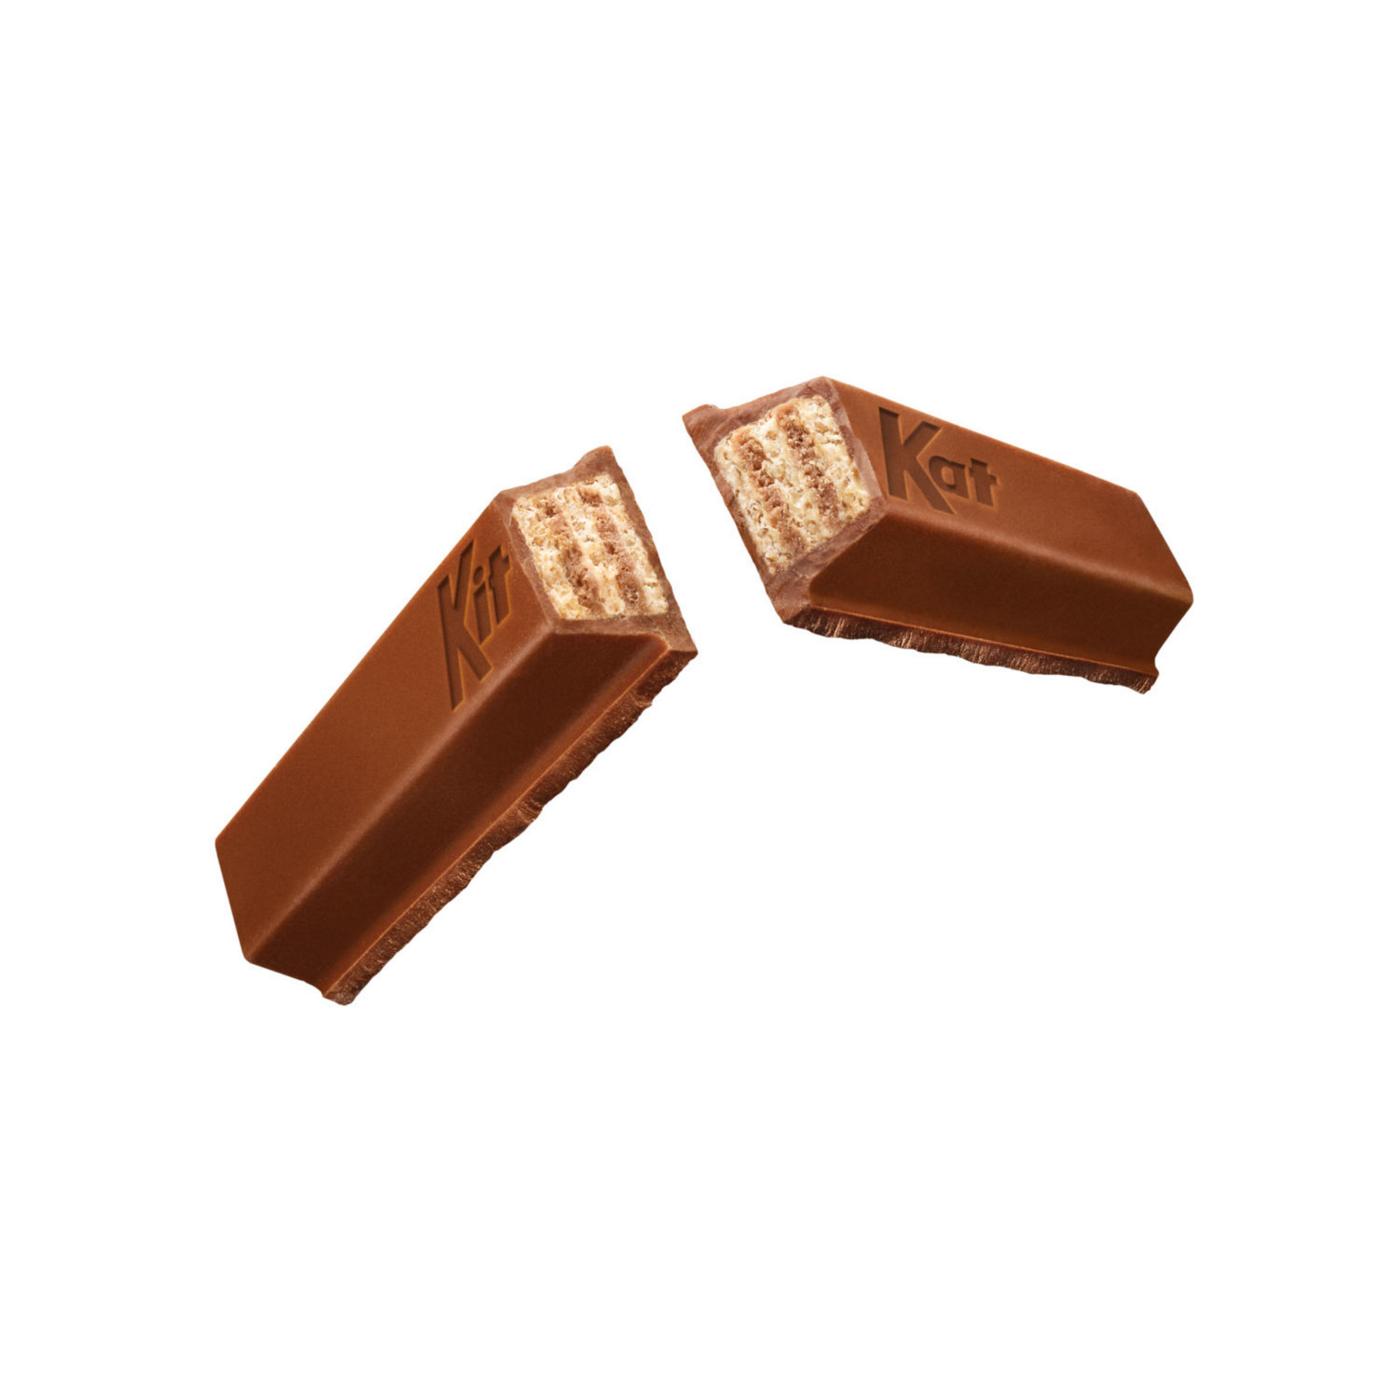 Kit Kat Milk Chocolate Wafer Candy Bar - King Size; image 2 of 7